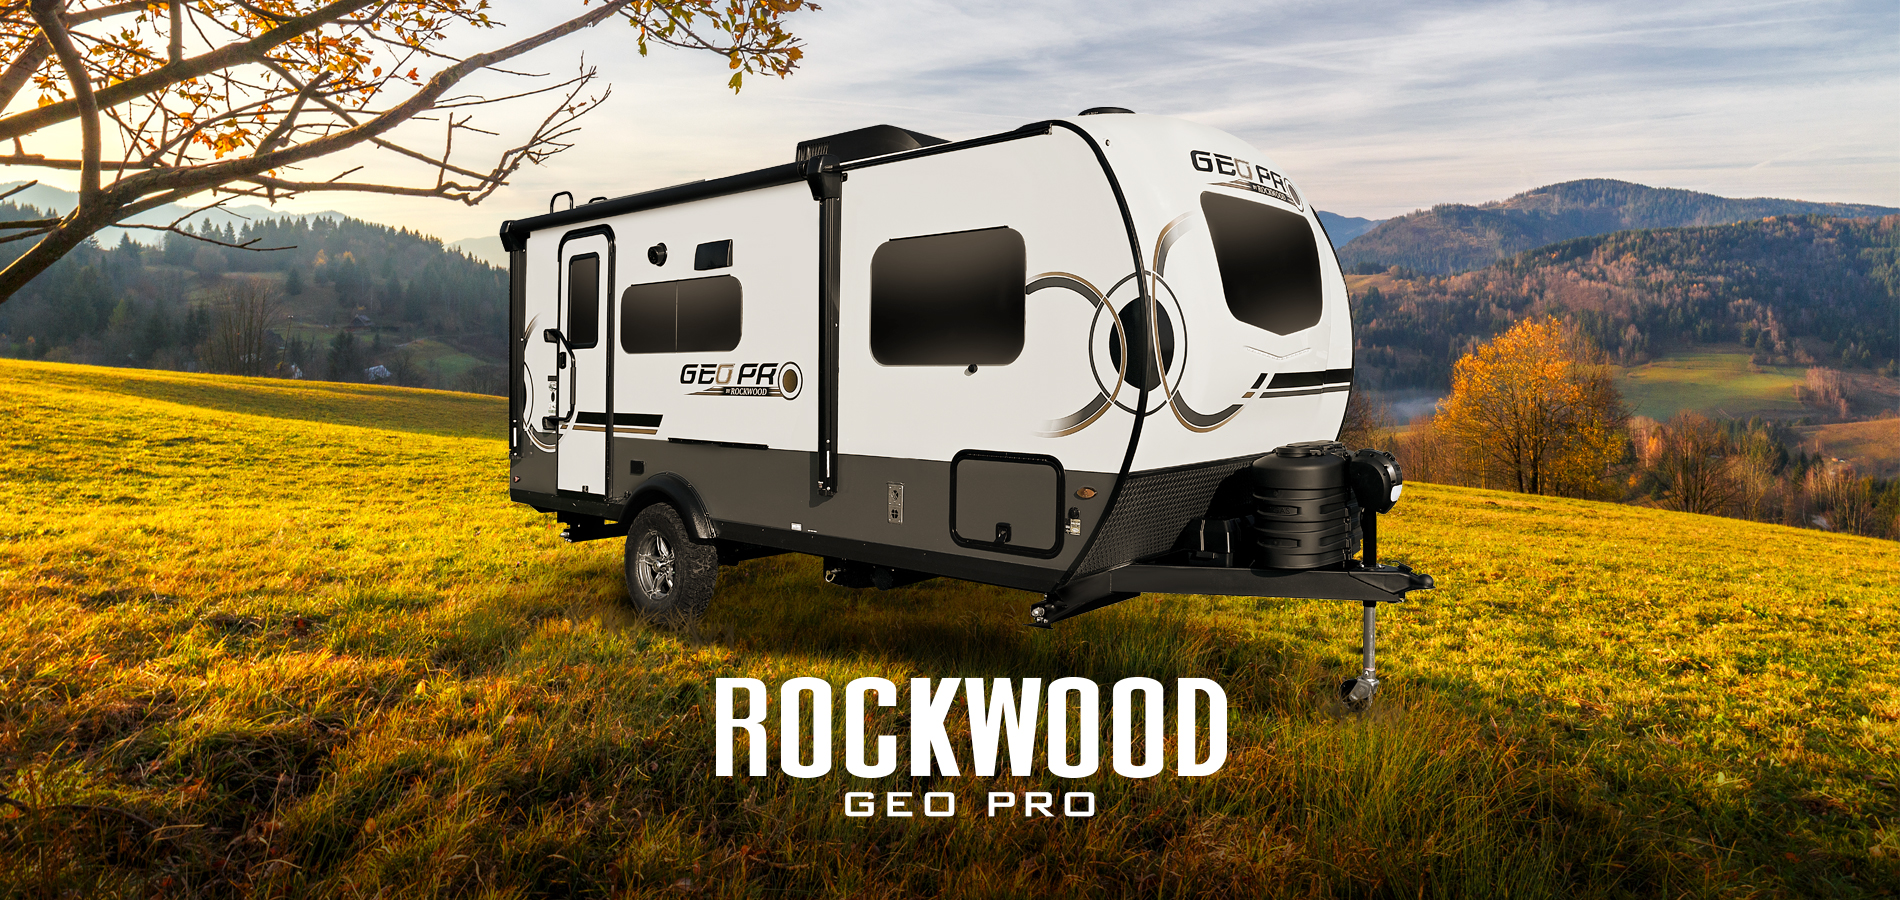 Rockwood Geo Pro RVs